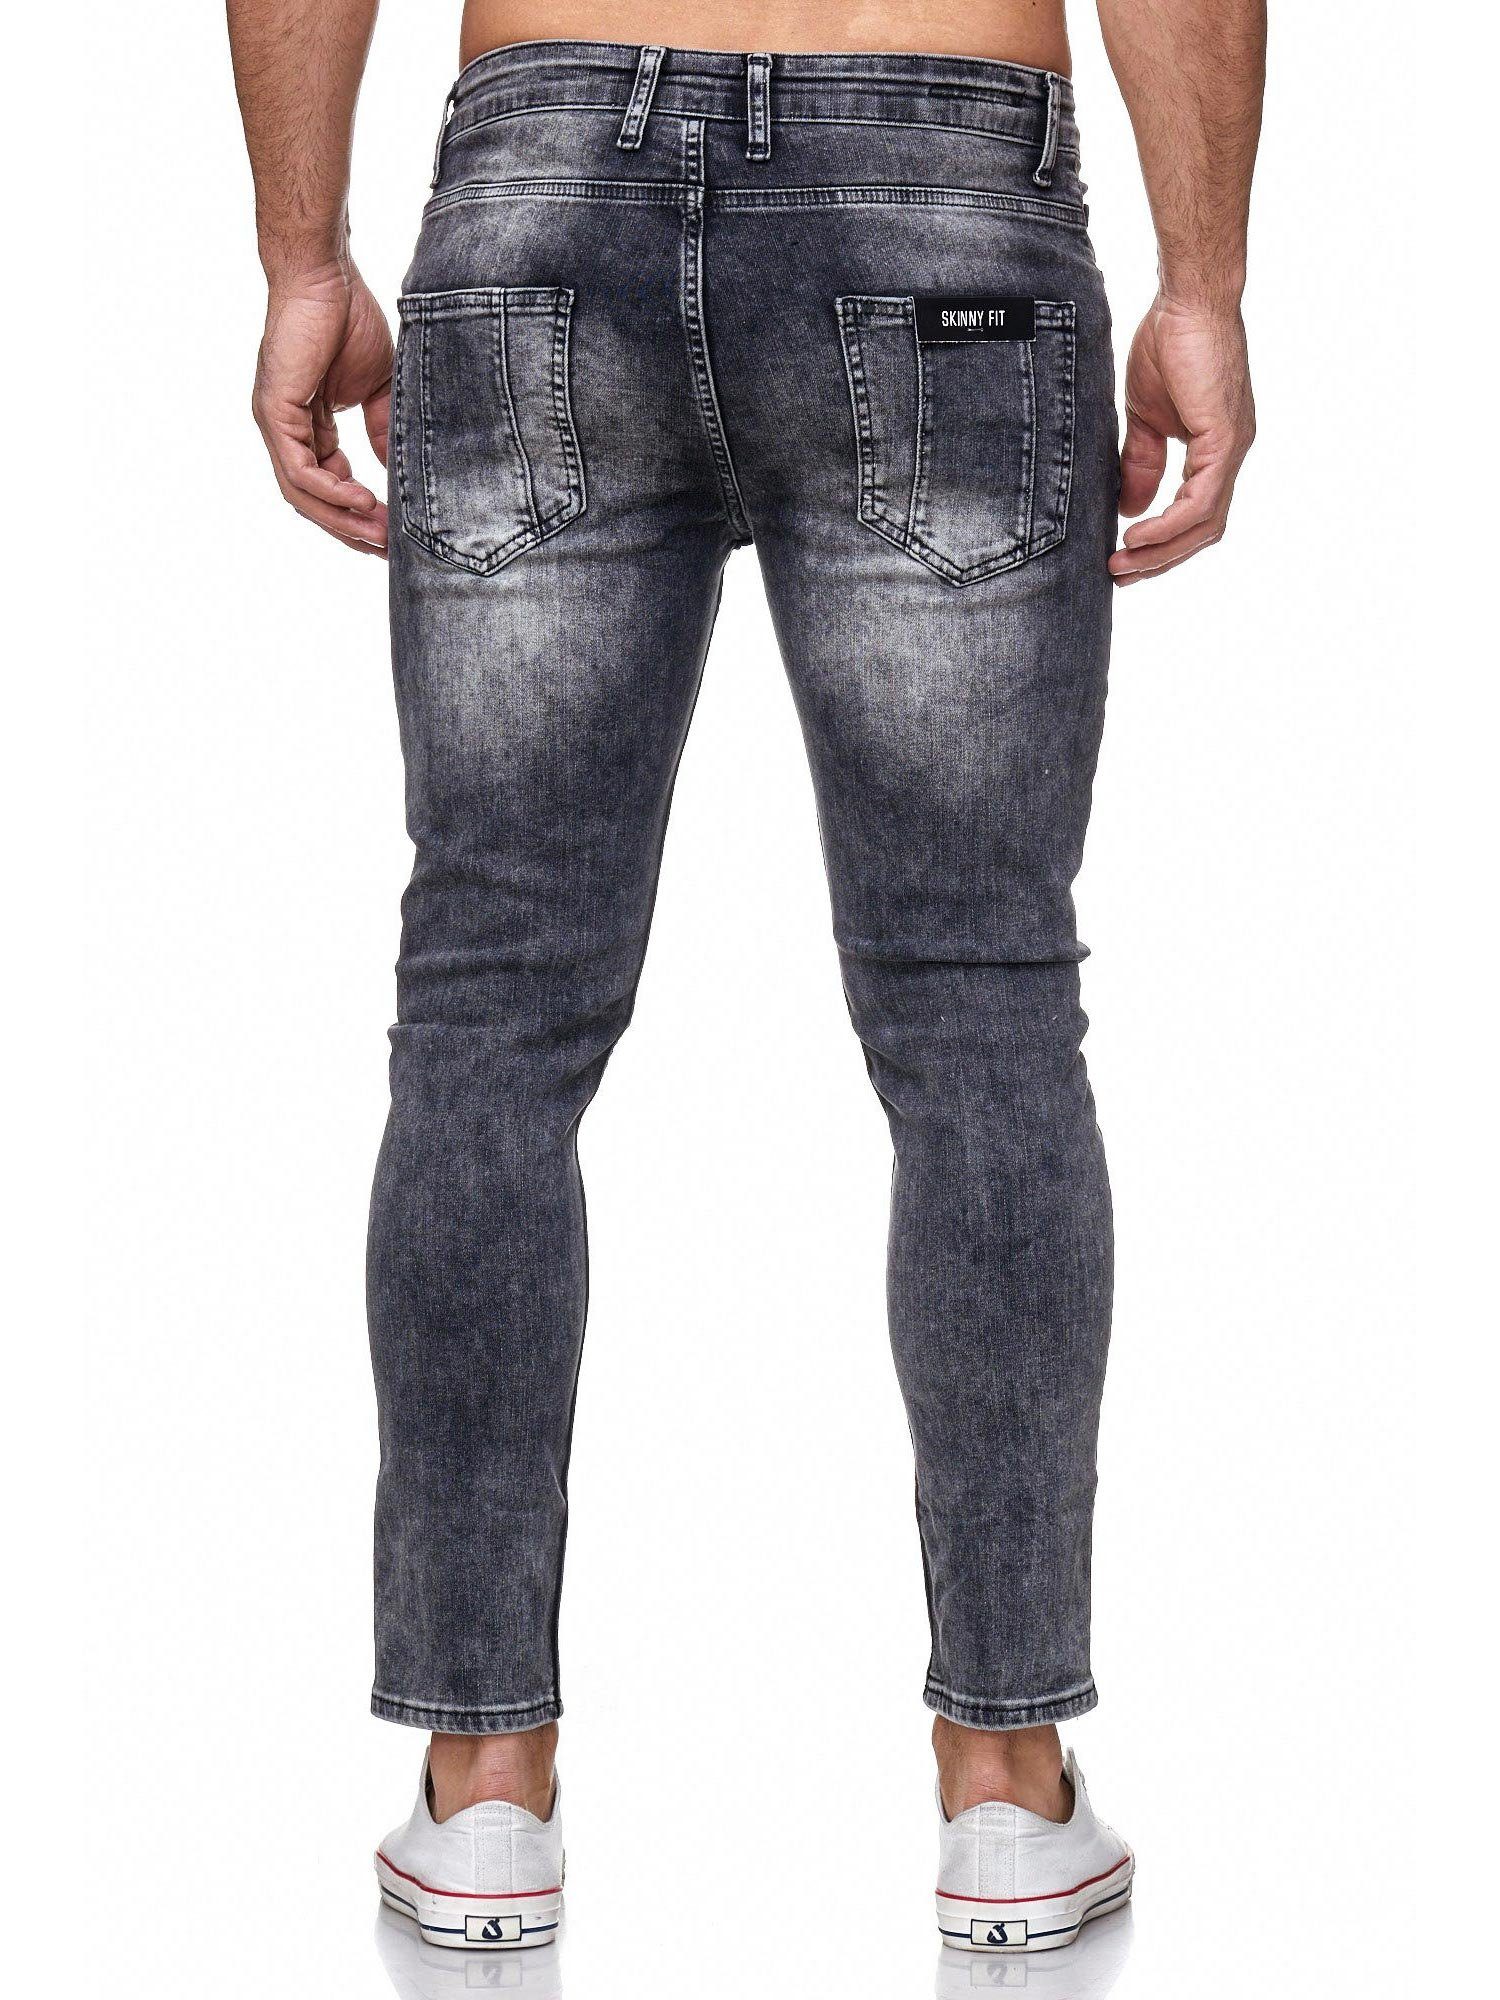 17516 Destroyed-Look Tazzio Skinny-fit-Jeans im schwarz